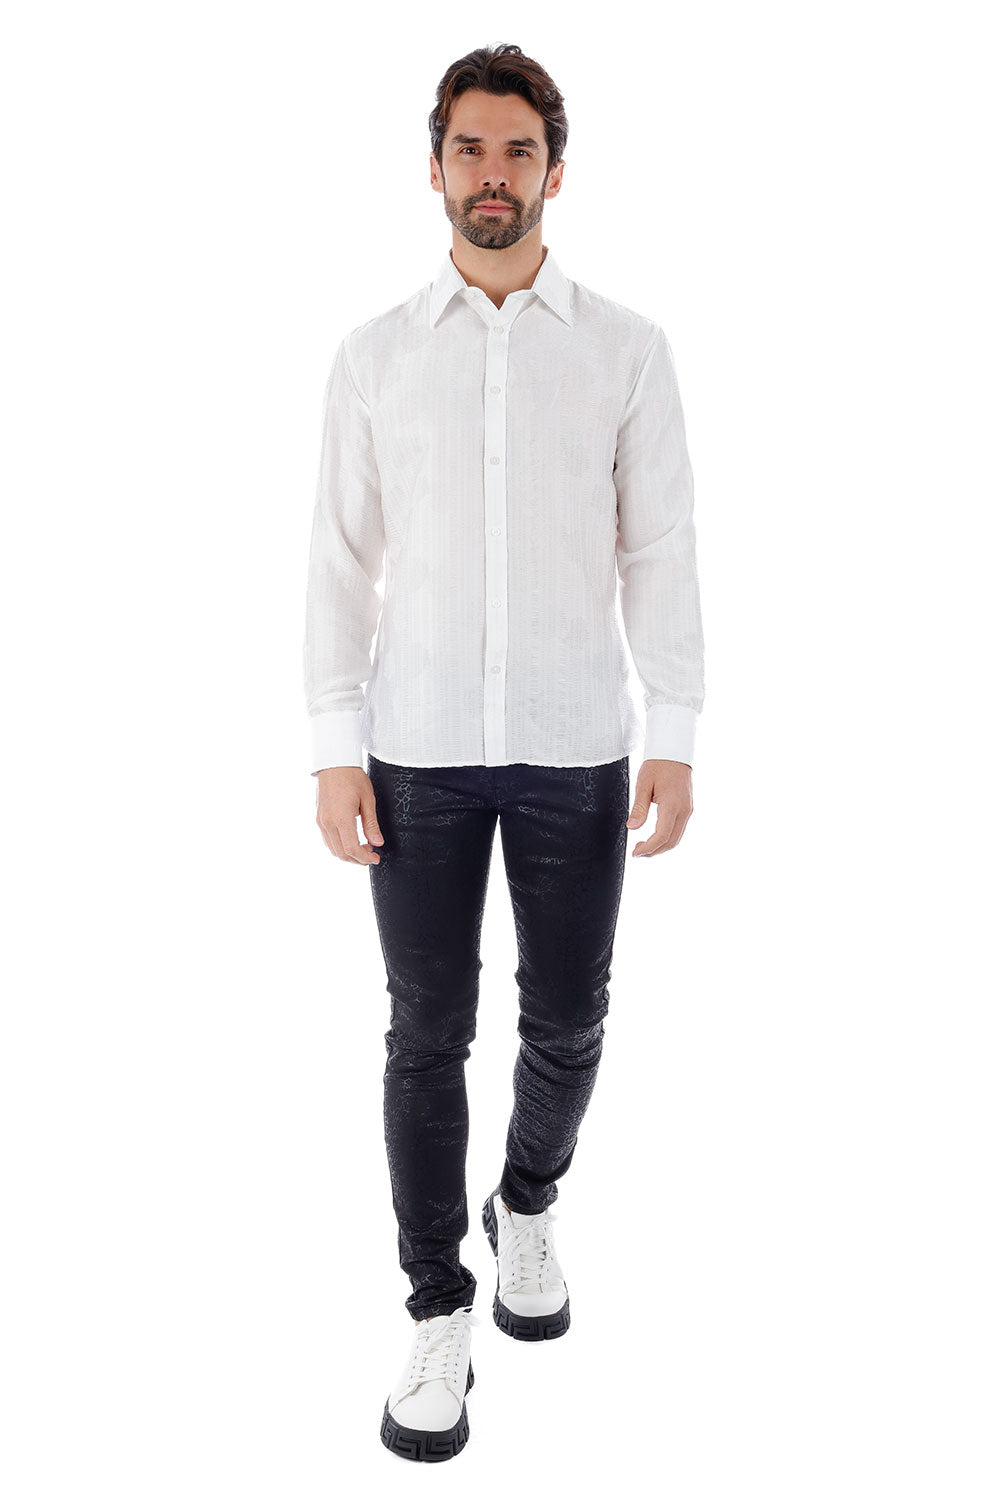 BARABAS Men's Floral Rose Button Down Long Sleeve Shirt 4B31 White